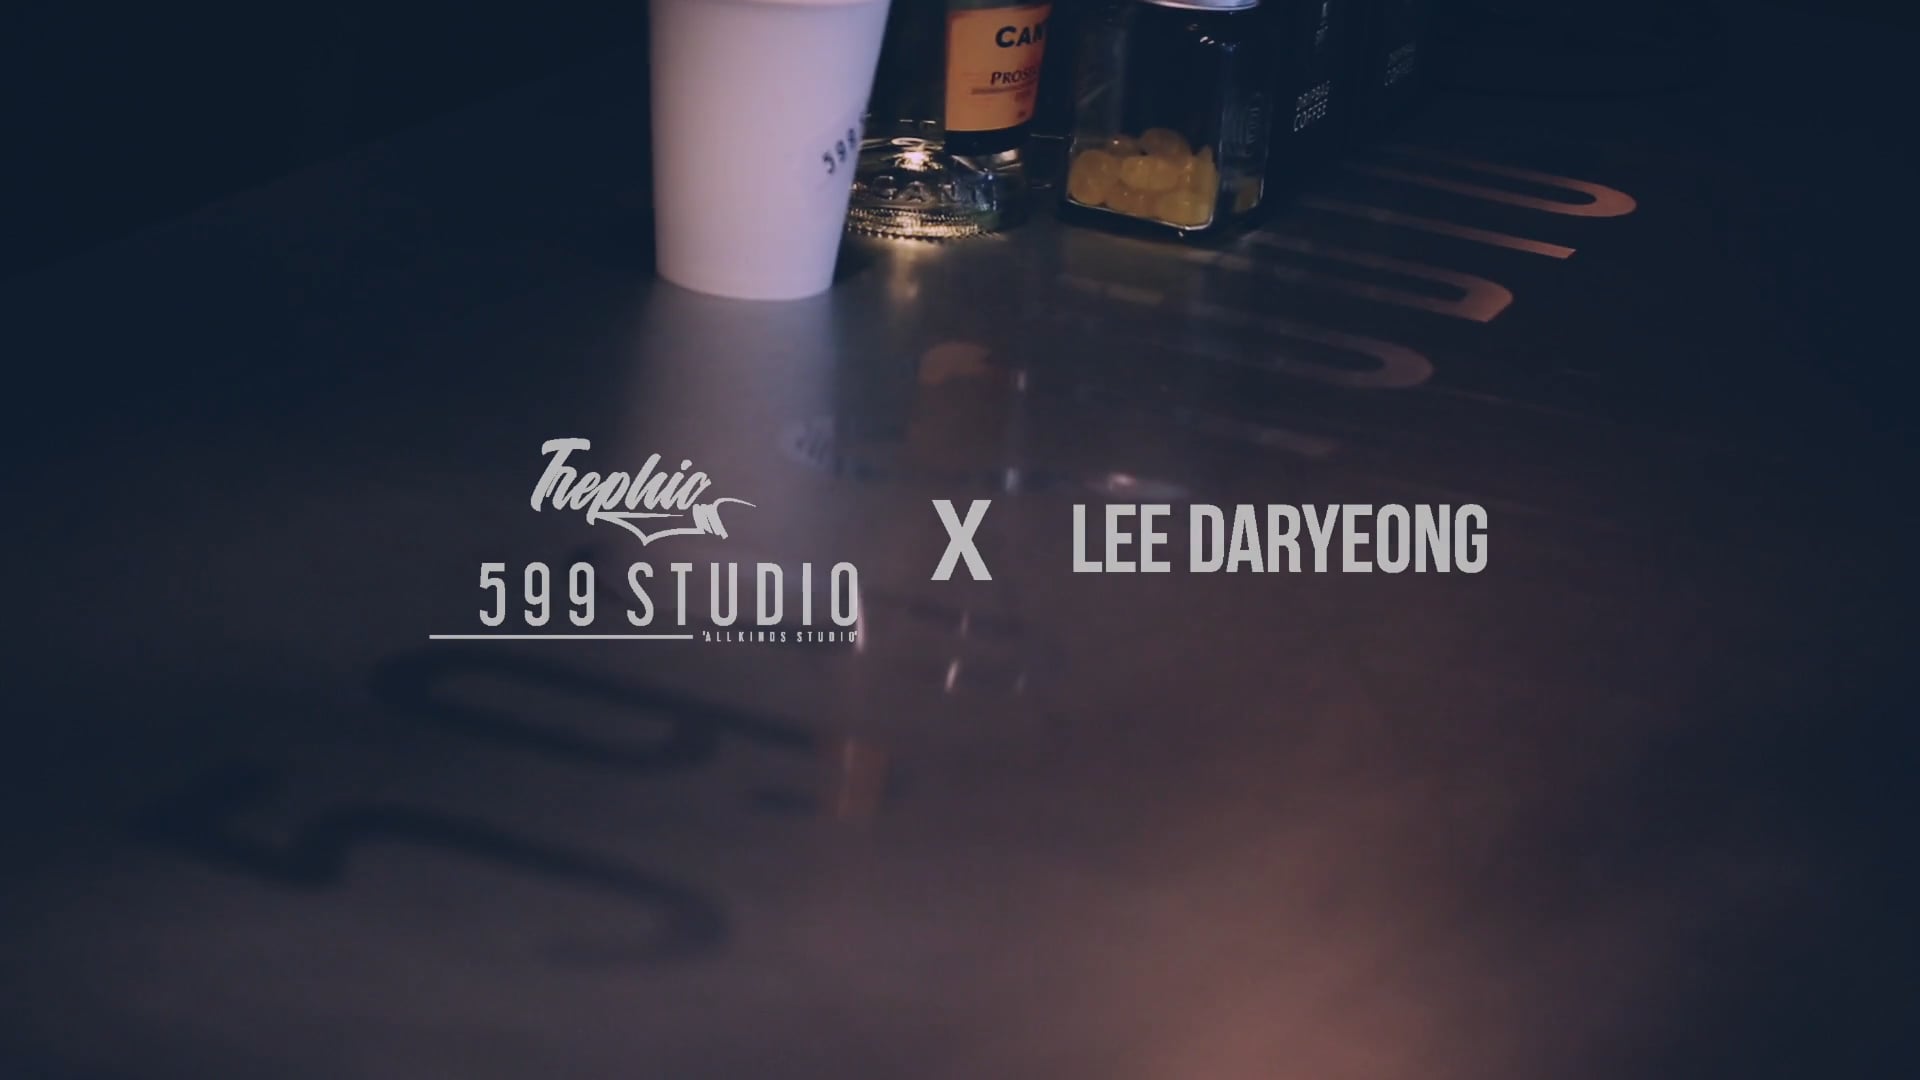 Racing Model Lee Daryeong Making Film [ Trephic X 599Studio X Lee Daryeong ]